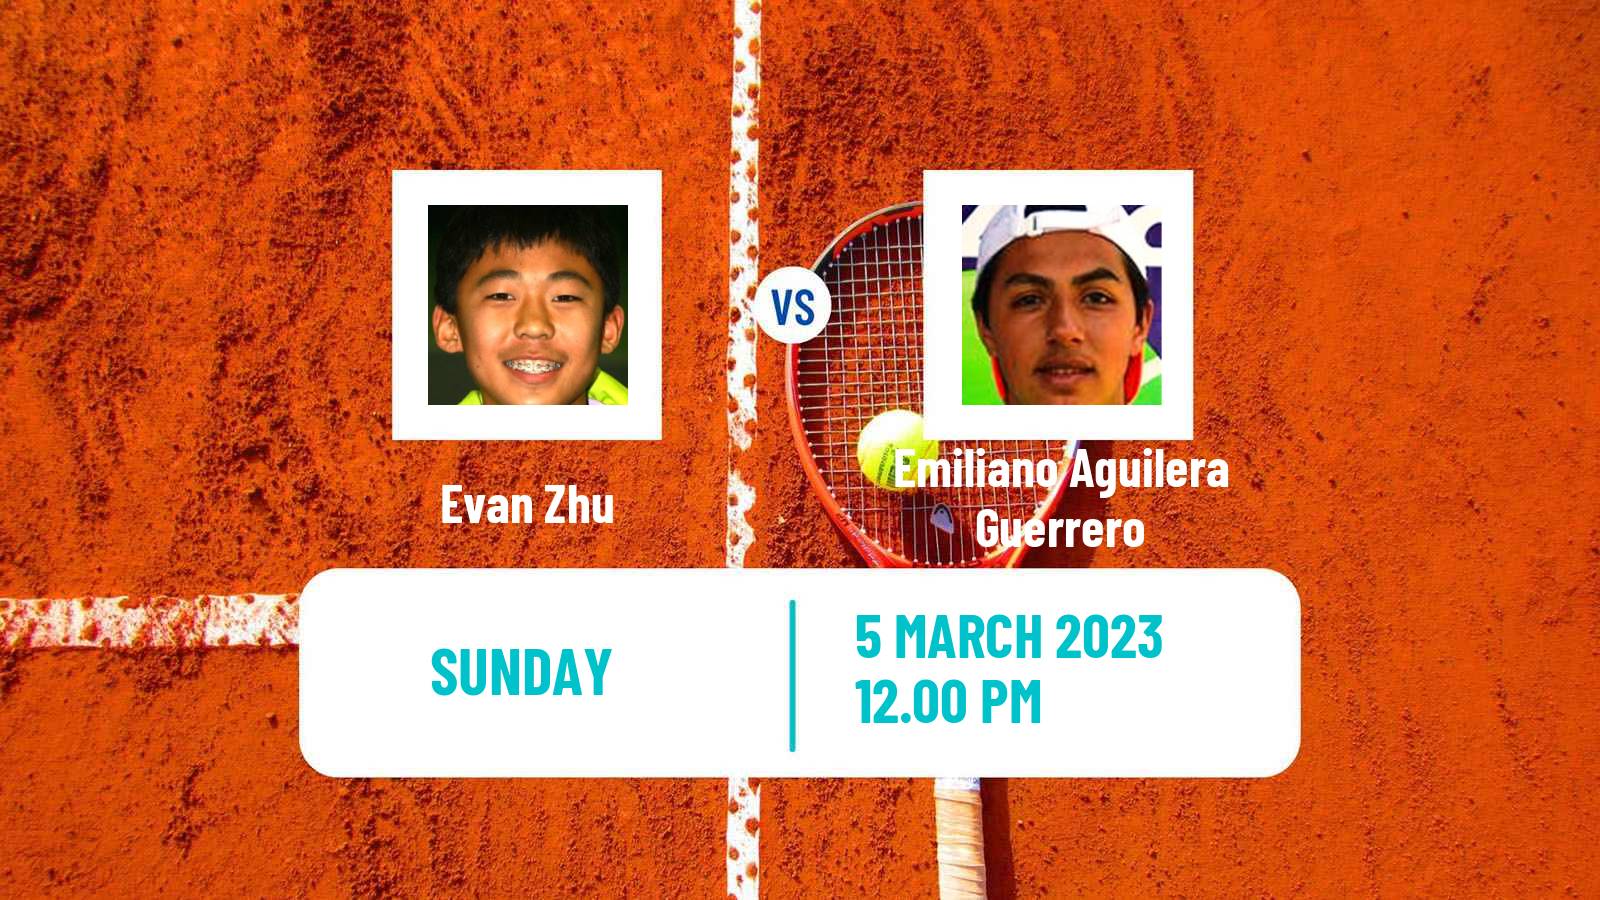 Tennis ATP Challenger Evan Zhu - Emiliano Aguilera Guerrero